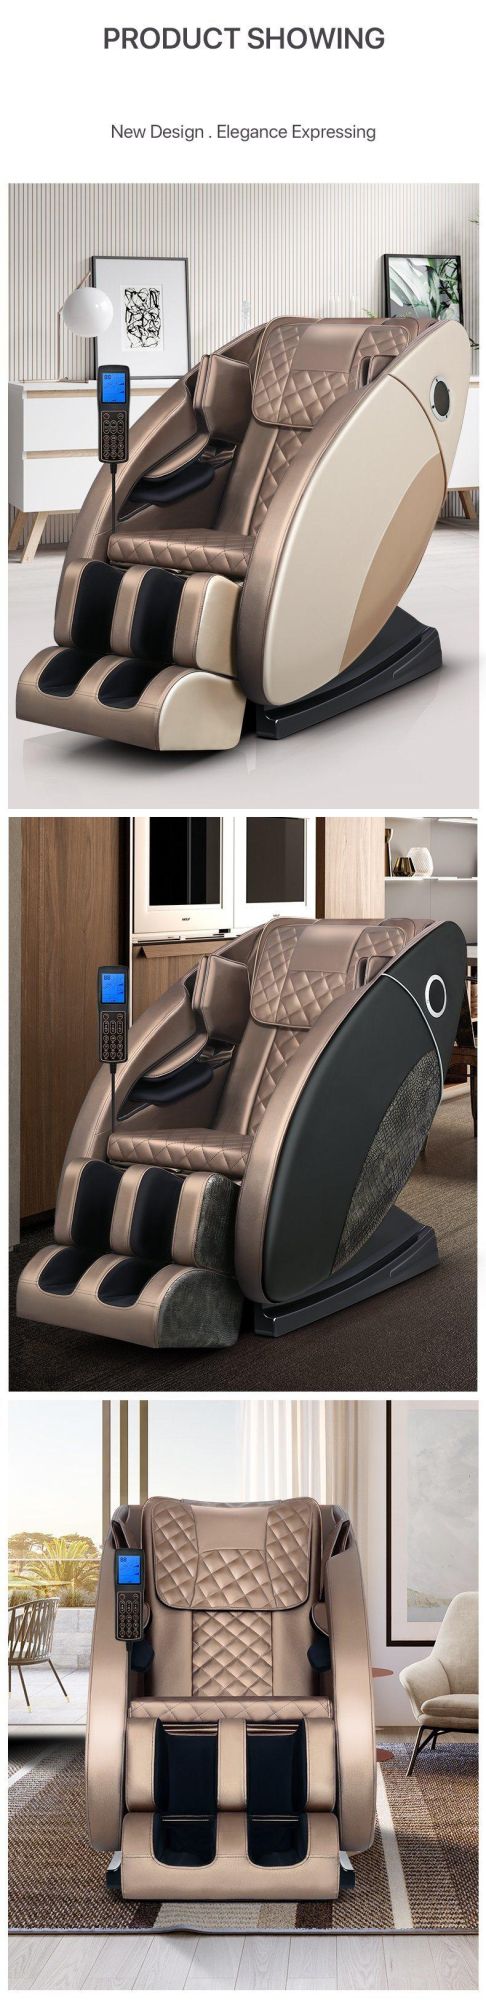 Jare R5 New Design Hot Sales Factory Price with Zero Gravity Chair Shiatsu Massager Full Body Electric Cheap Massage Chair